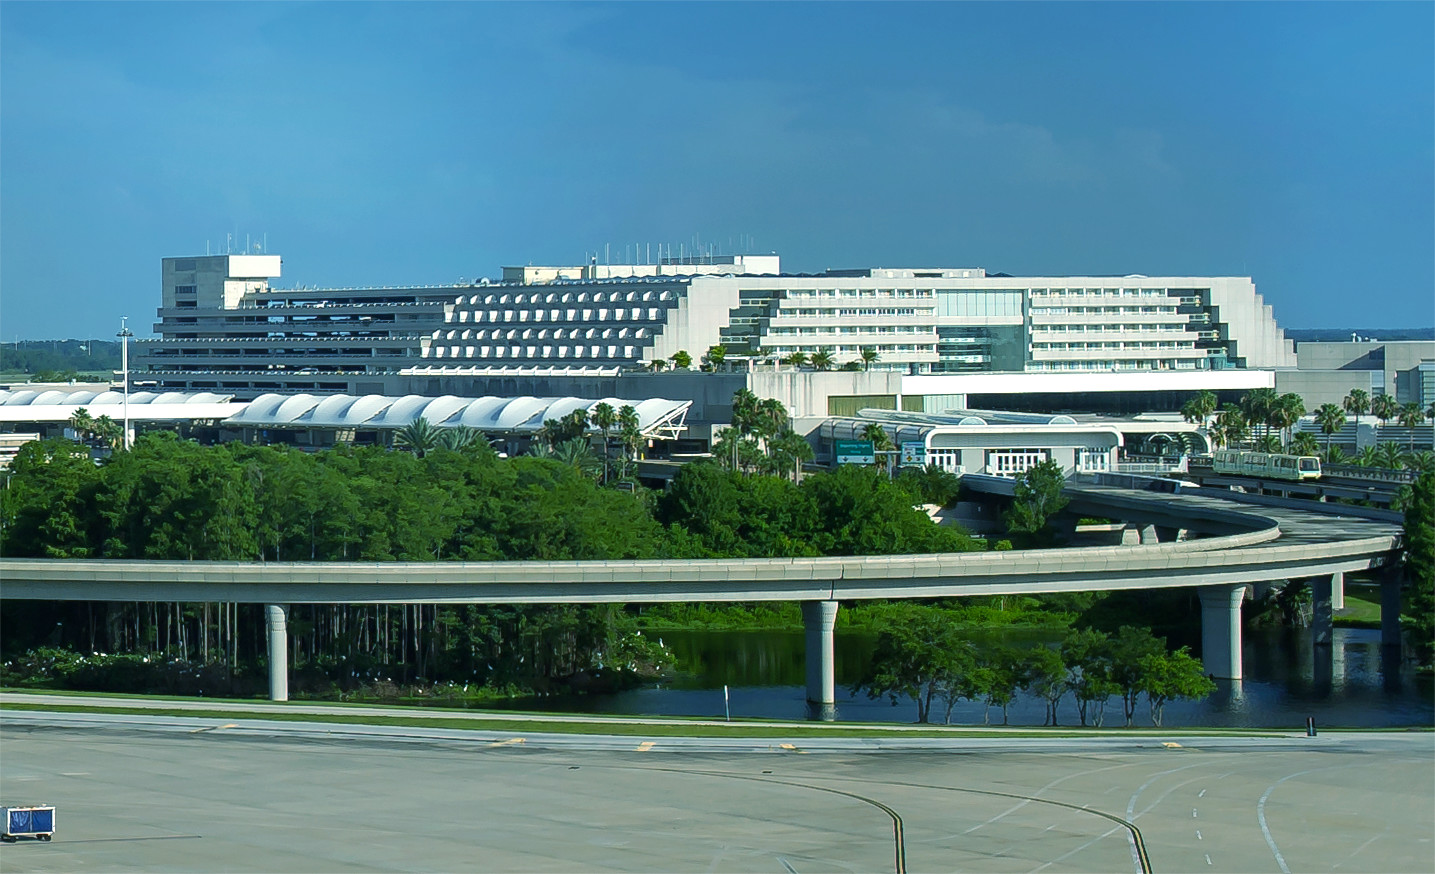 Parking - Orlando International Airport (MCO)